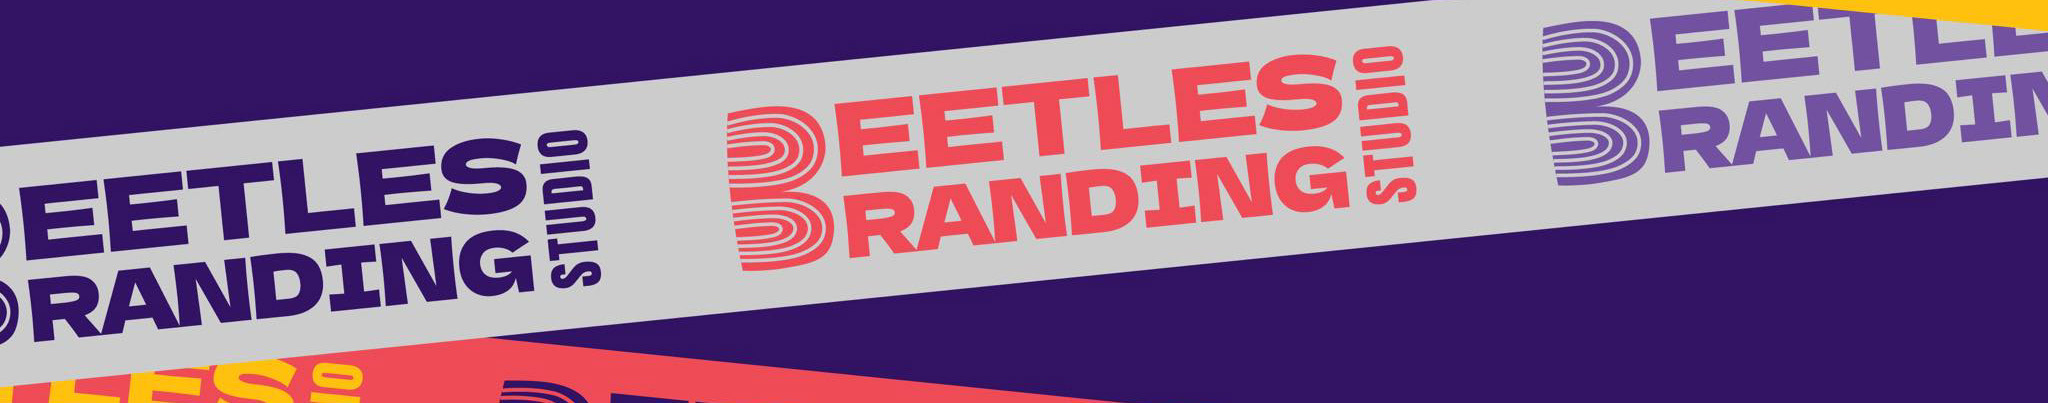 Beetles Branding Studio's profile banner